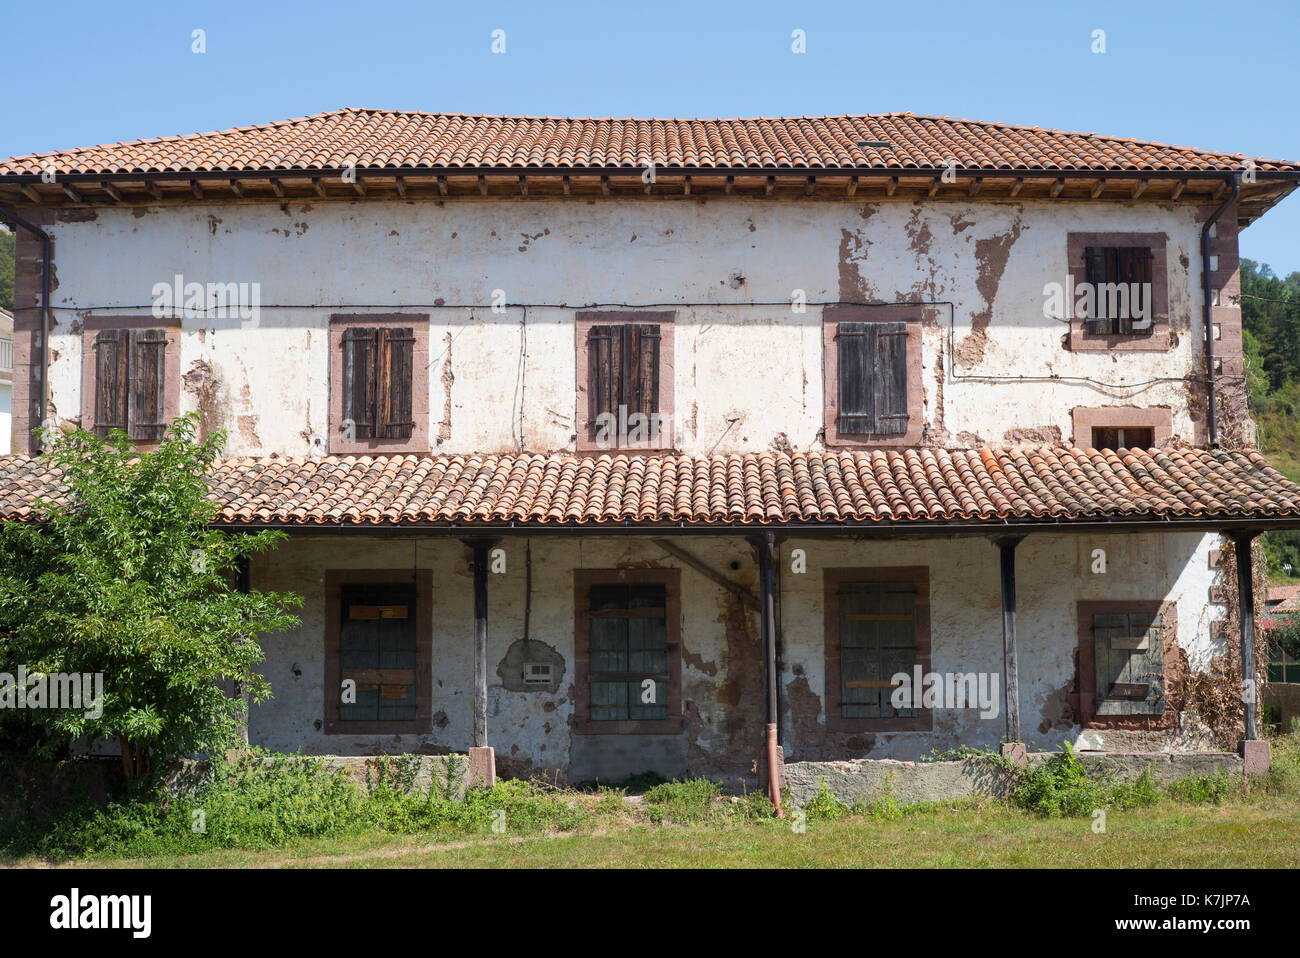 Casa española abandonada fotografías e imágenes de alta resolución - Alamy